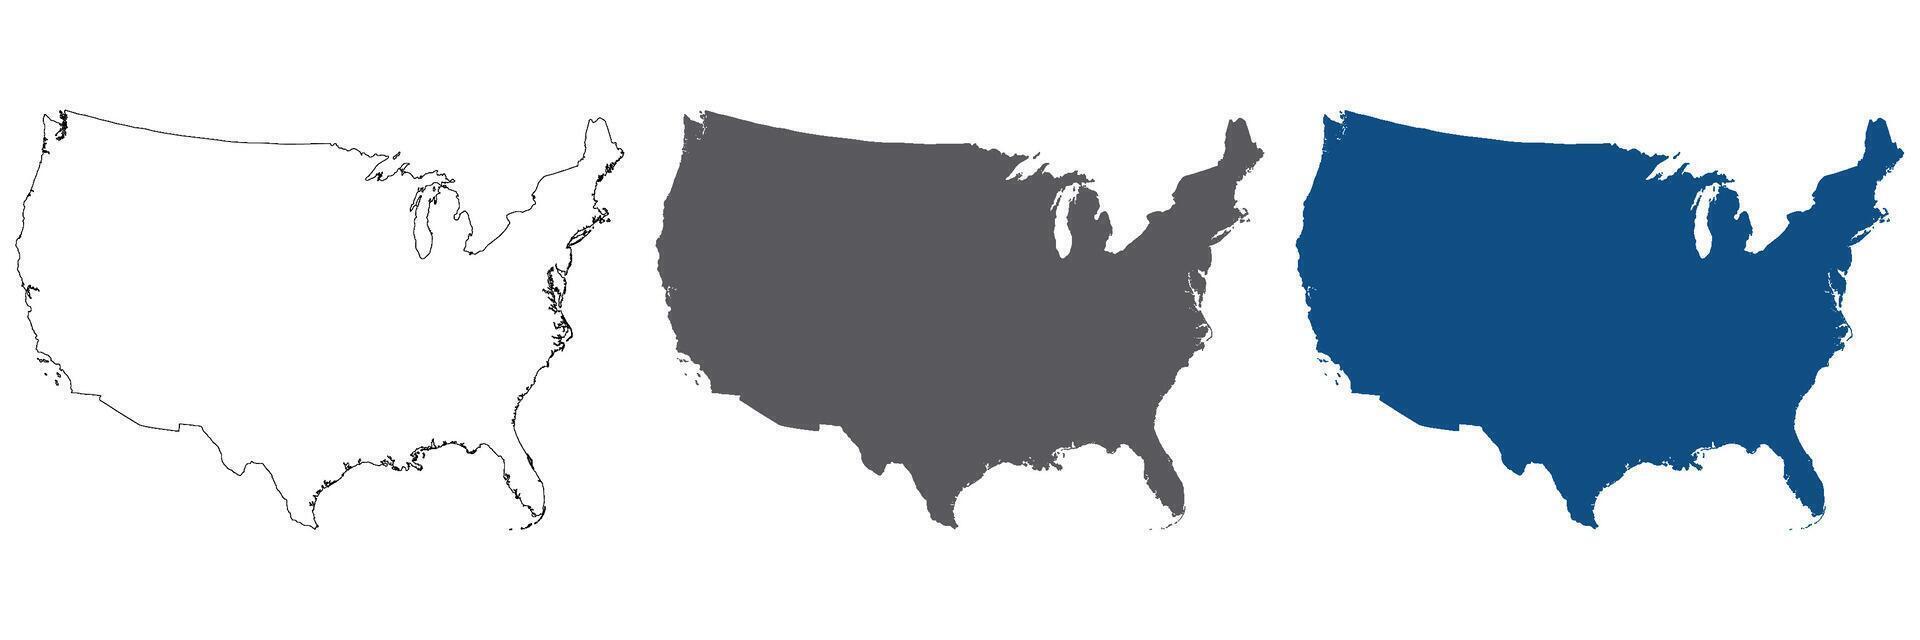 Verenigde Staten van Amerika kaart, Amerika kaart, Verenigde staten van Amerika kaart in set. vector